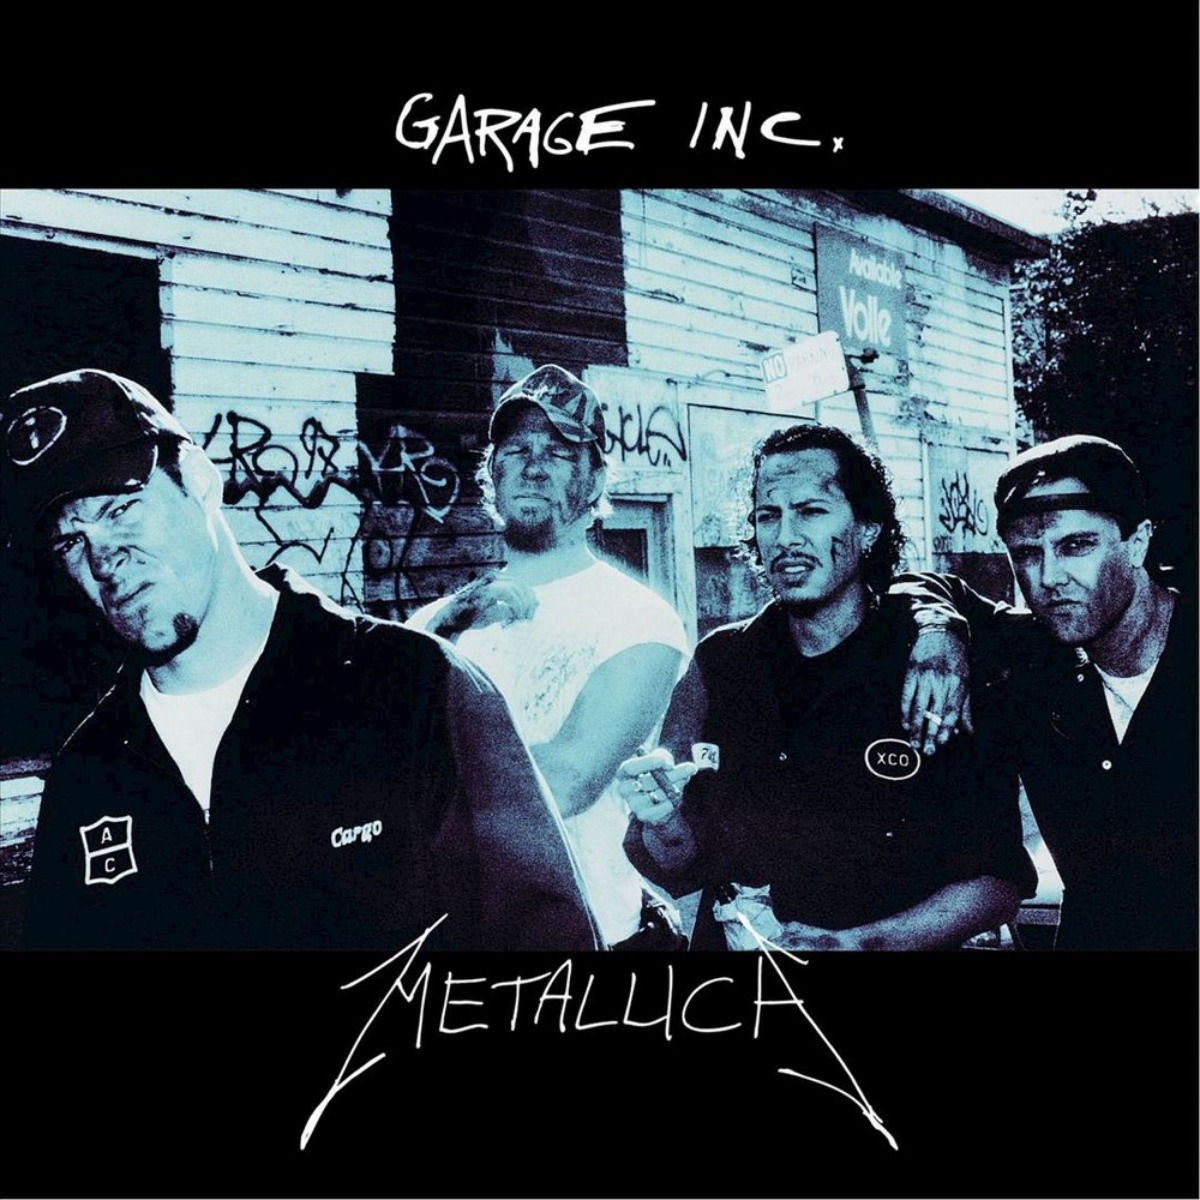 Capa da "Garage Inc." da Metallica.